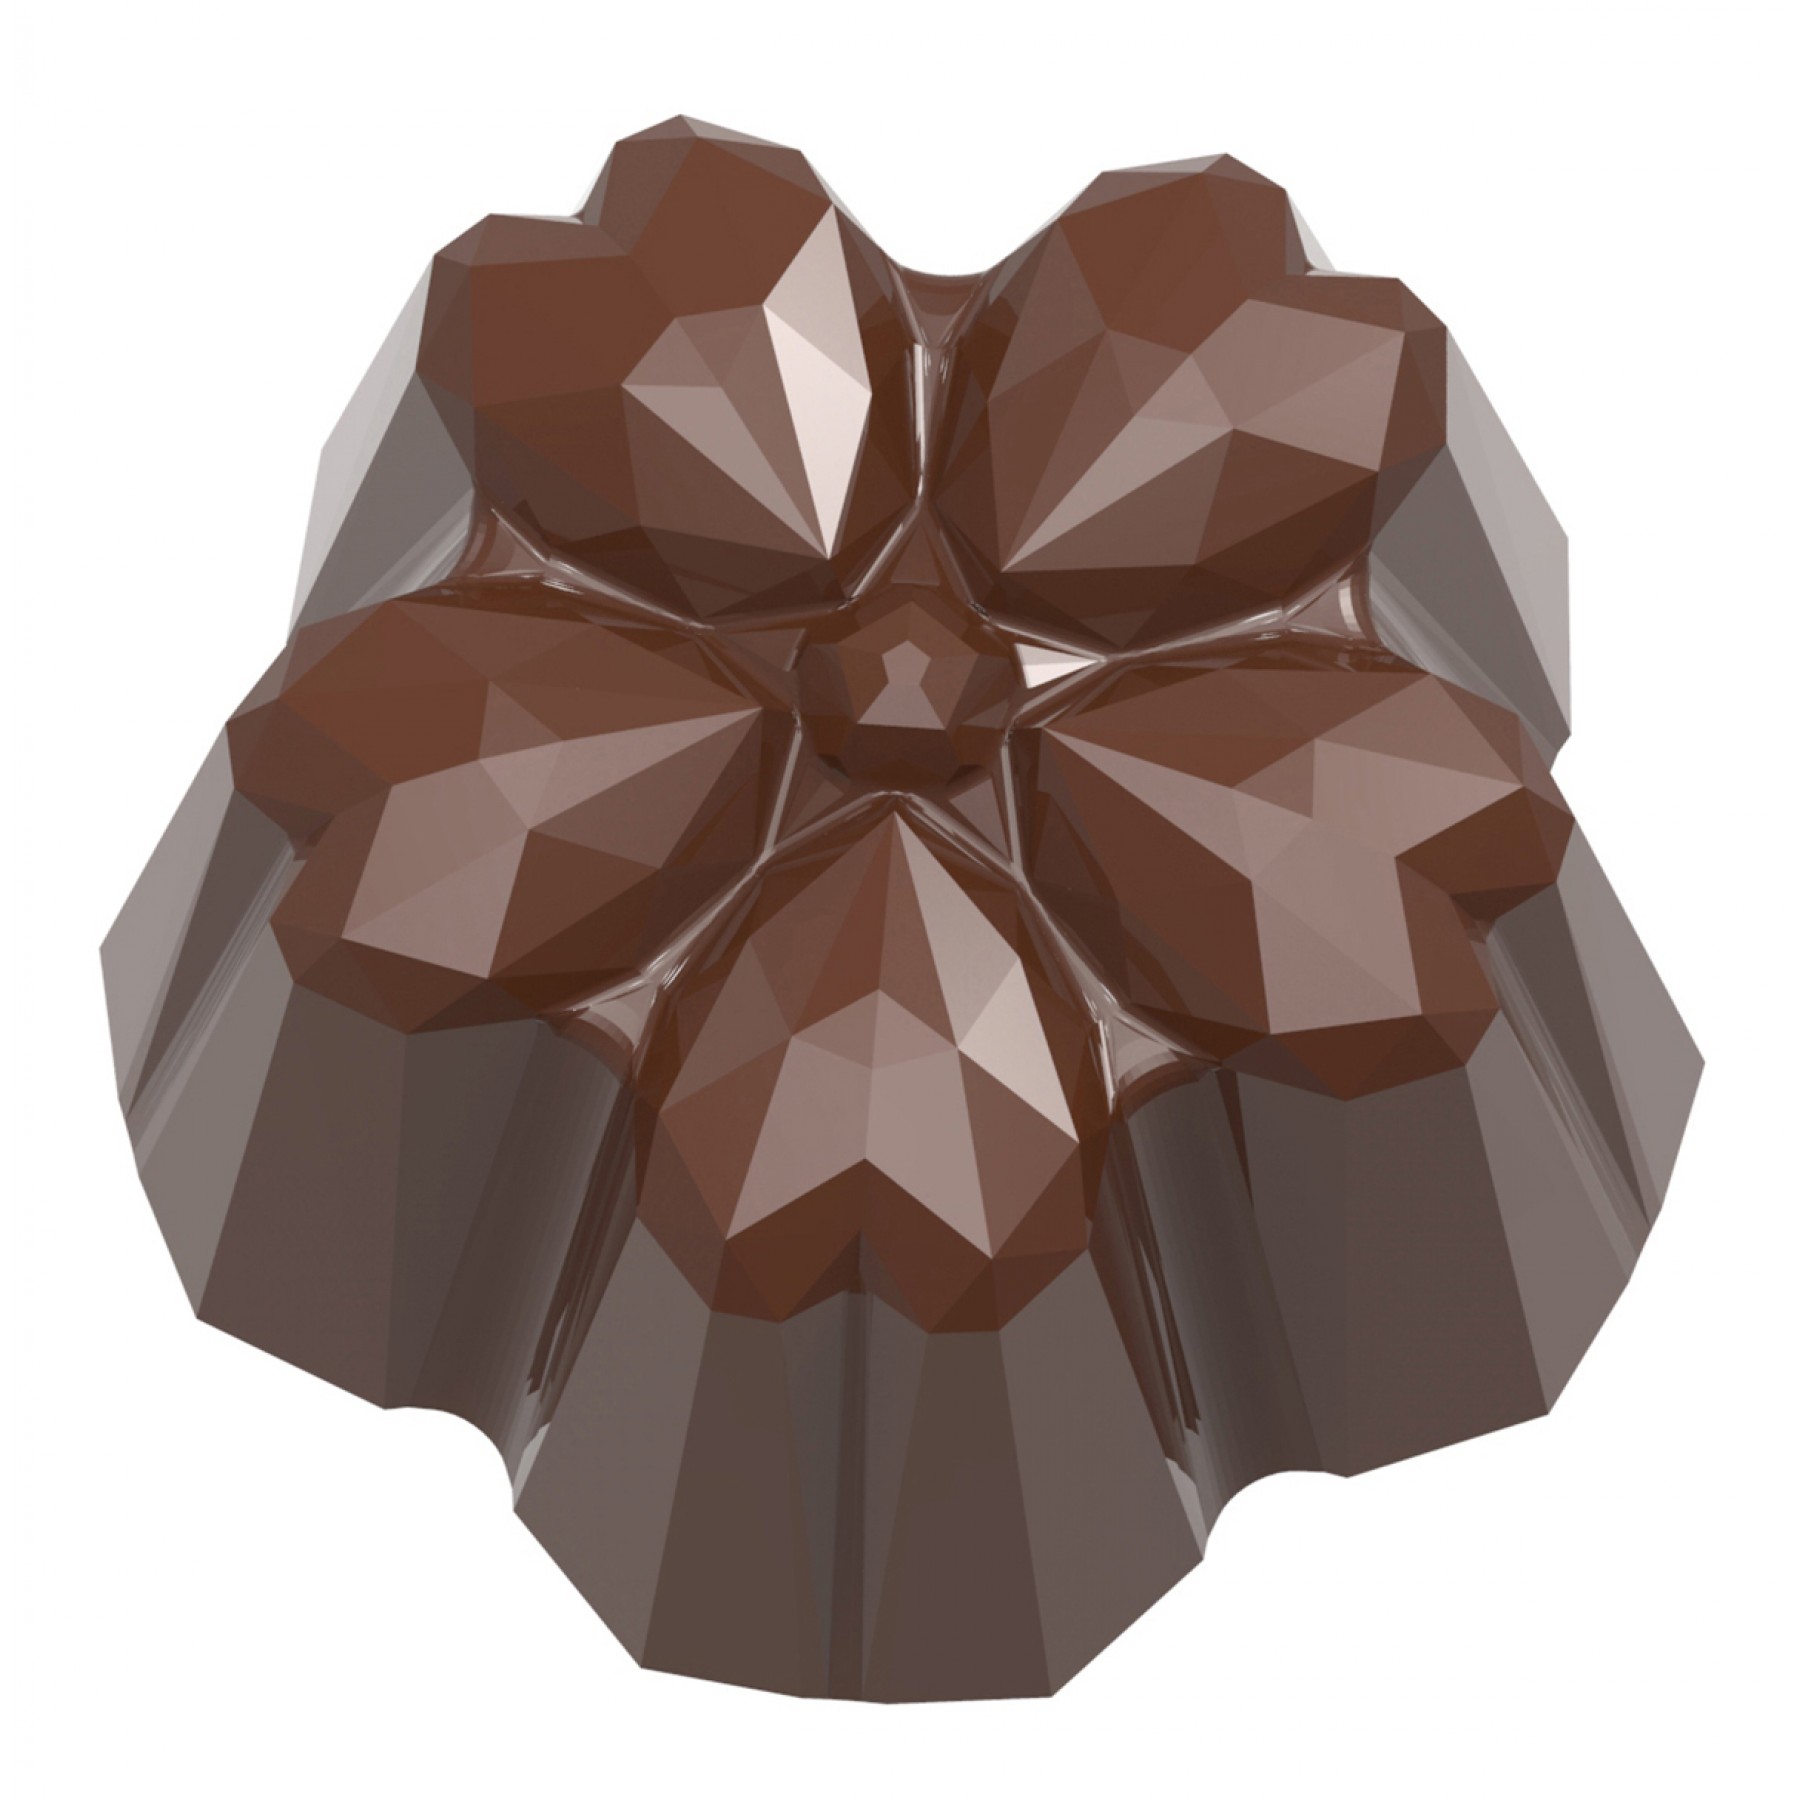 Форма для шоколада Sakura Origami поликарбонатная CW1918, Chocolate World, Бельгия  | Фото — Магазин Andy Chef  1